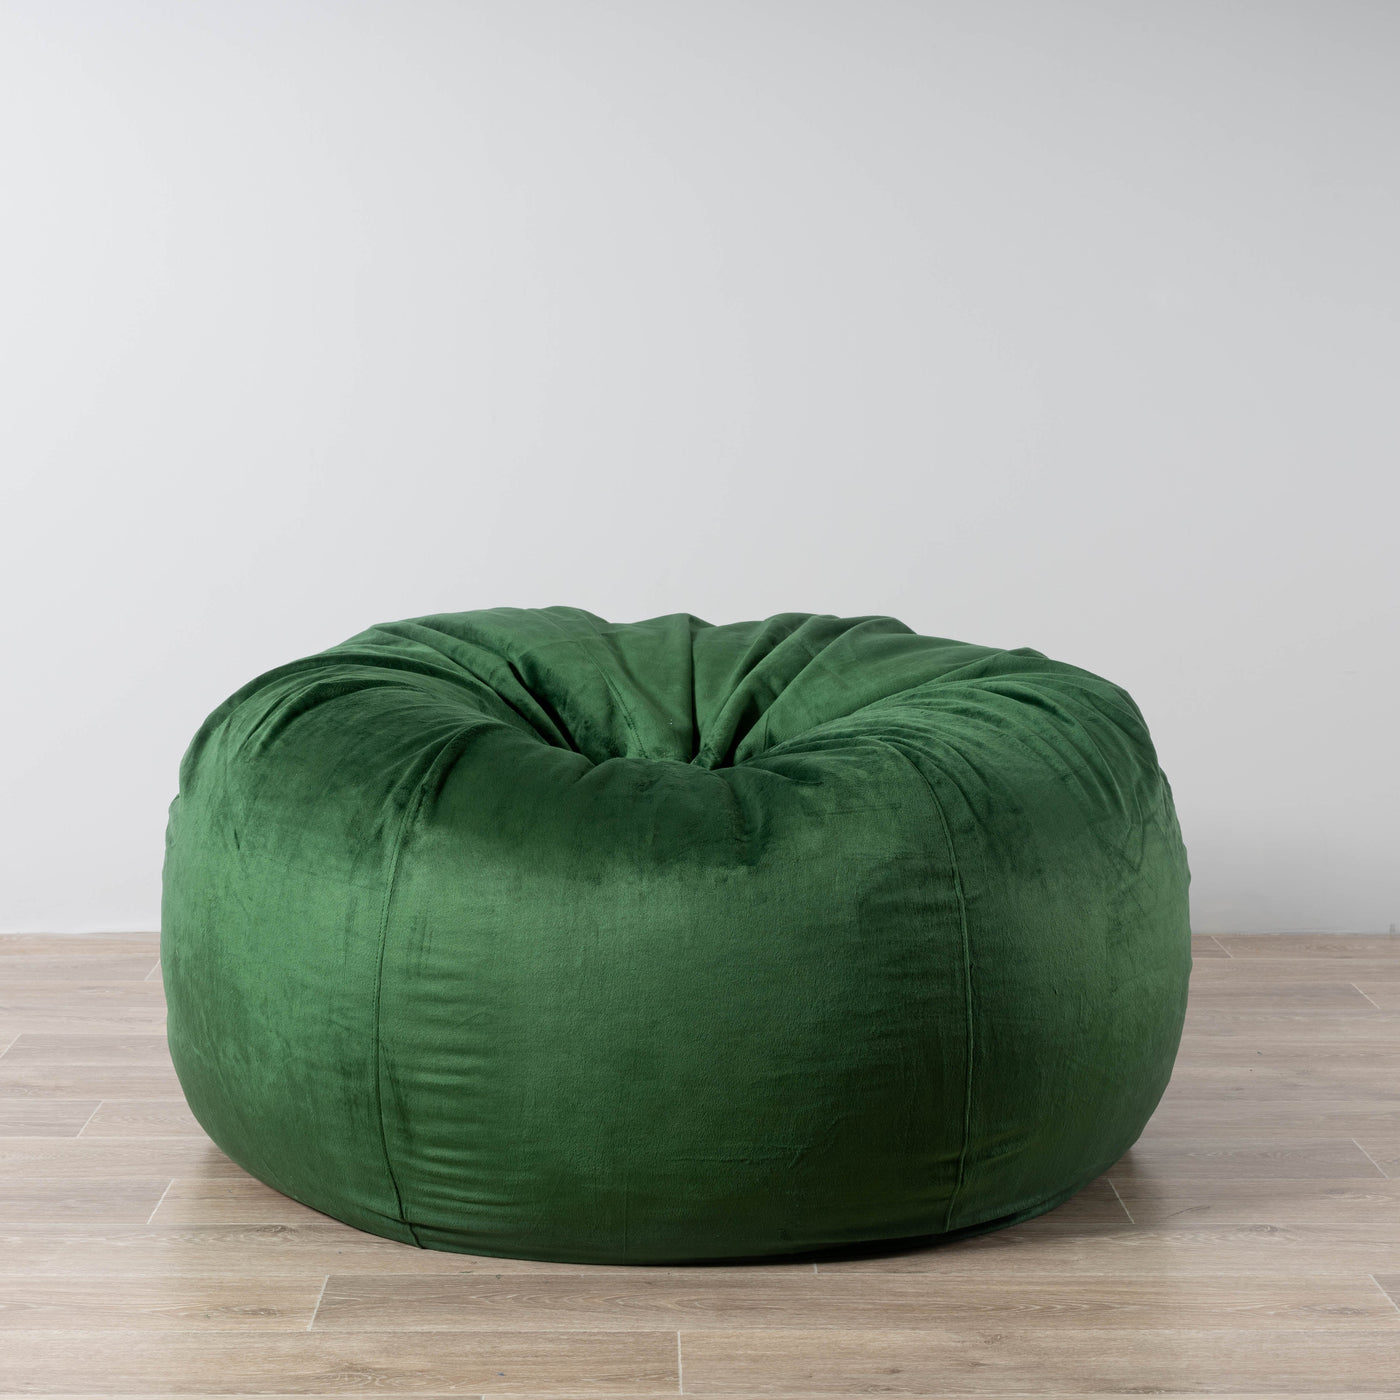 Pierre Fur Bean Bag - Emerald Green